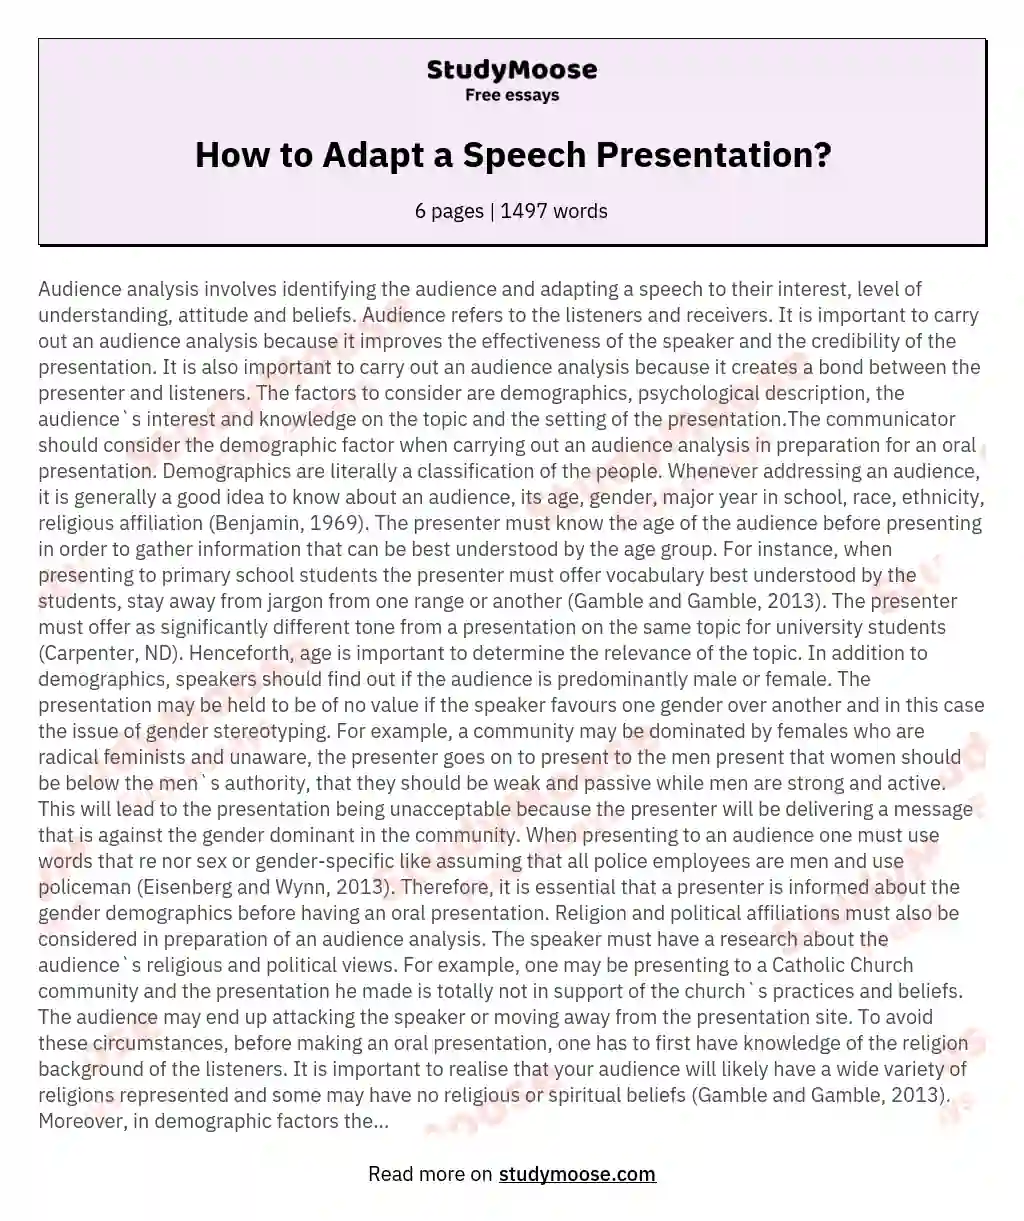 How to Adapt a Speech Presentation?